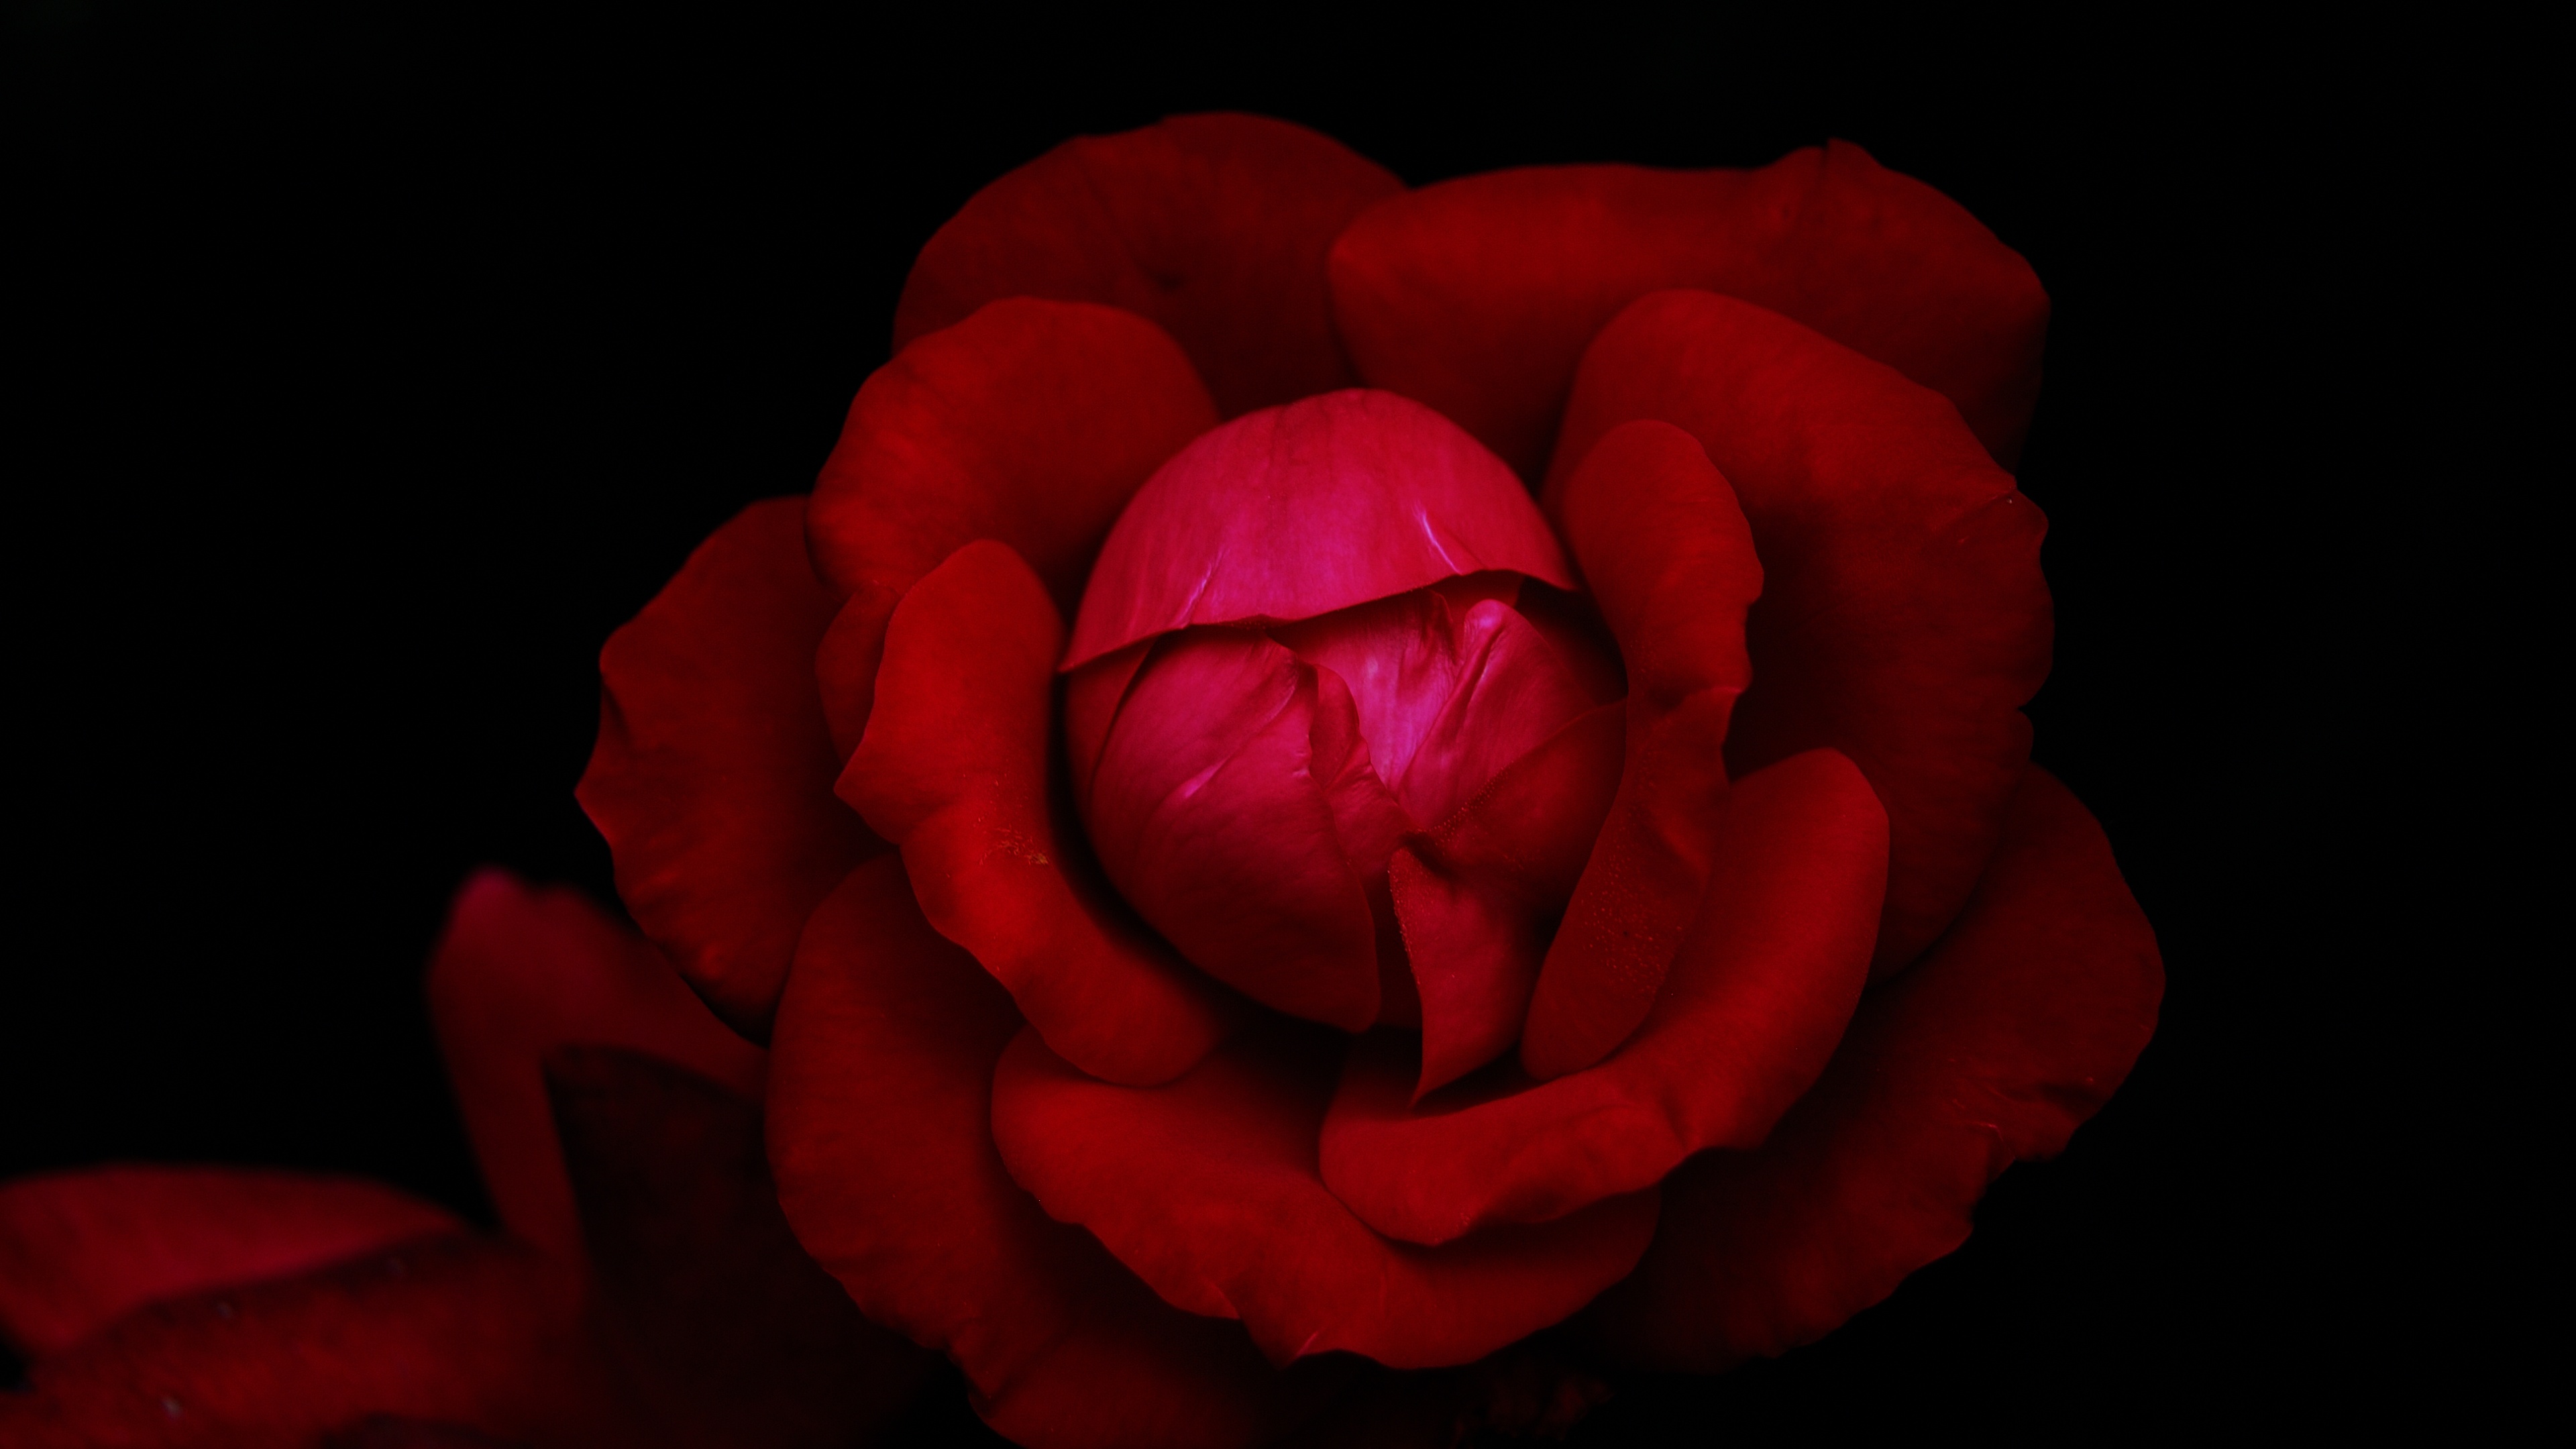 Hybrid tea rose Wallpaper 4K, Red Rose, Black background